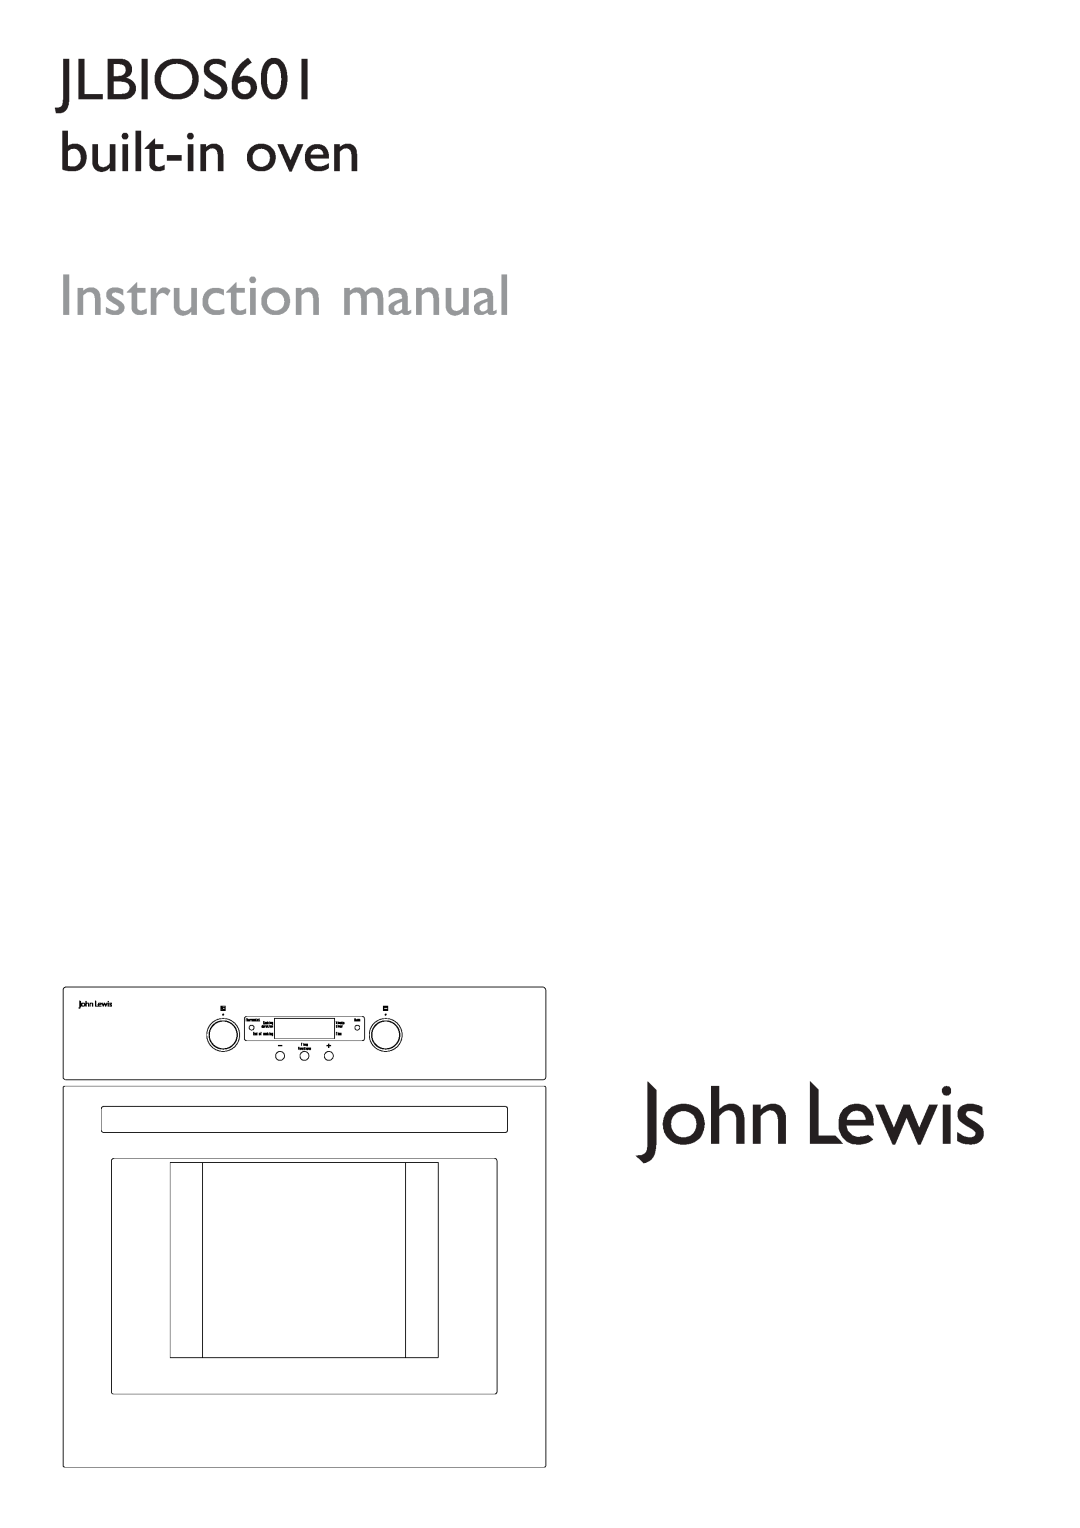 John Lewis instruction manual JLBIOS601 built-in oven 